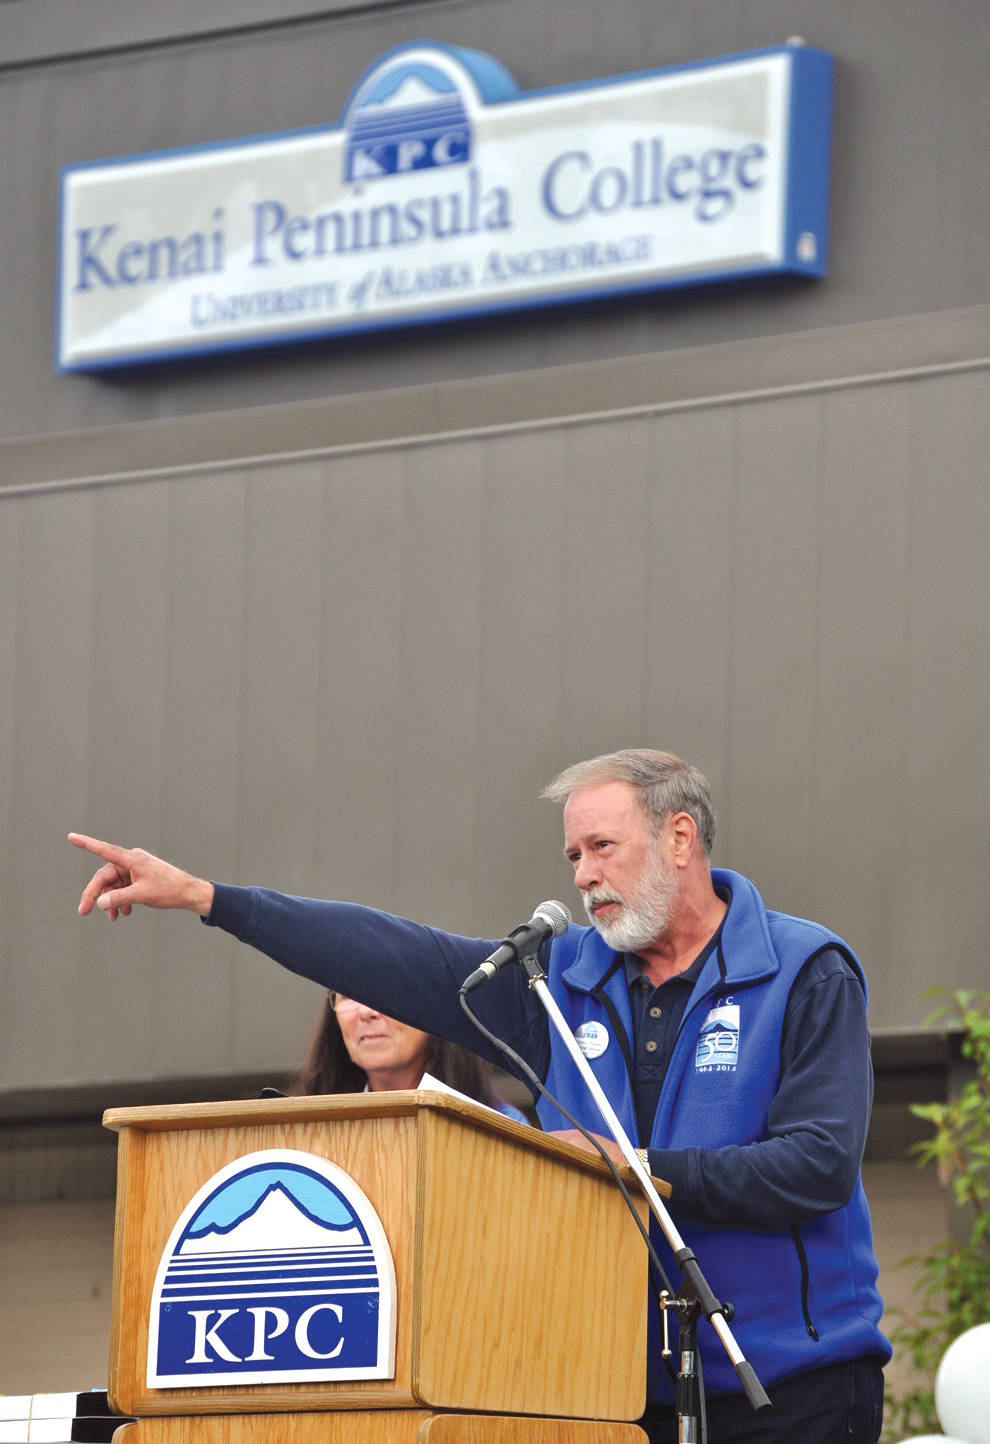 Kenai Peninsula College head announces retirement